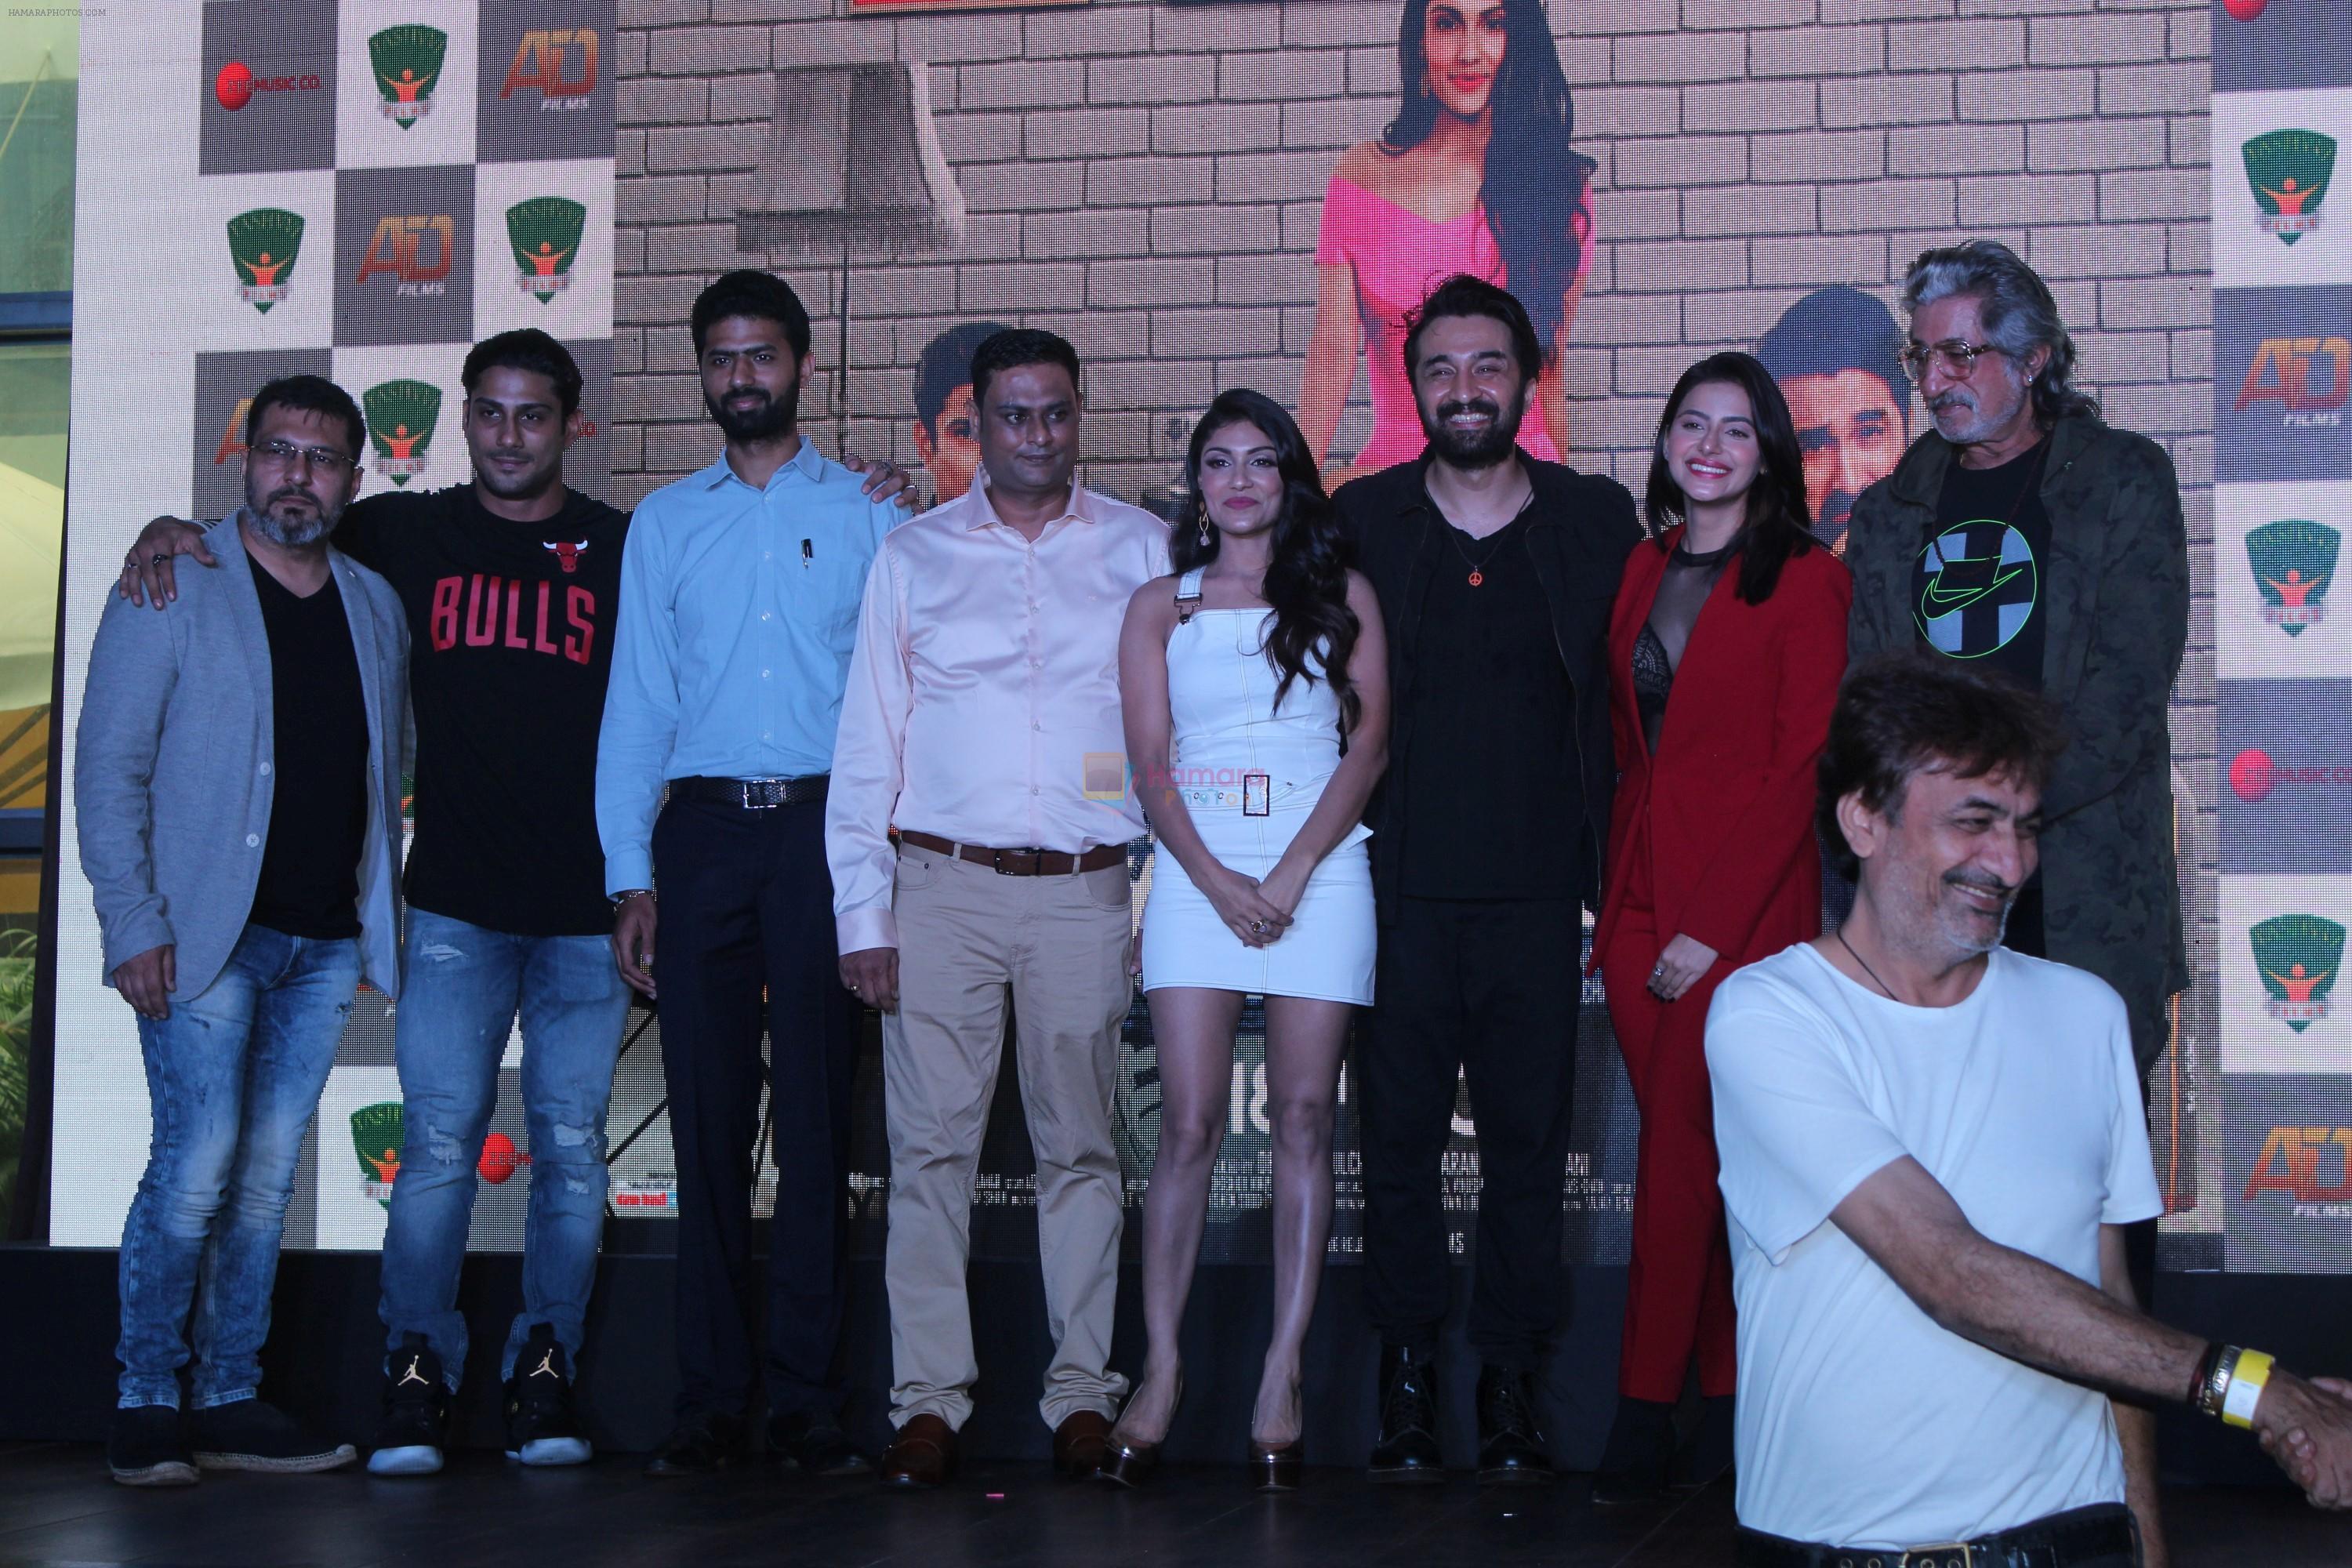 Siddhanth Kapoor, Prateik Babbar, Ishita Raj Sharma, Subha Rajput, Shakti Kapoor at the trailer launch of film Yaaram on 24th Sept 2019